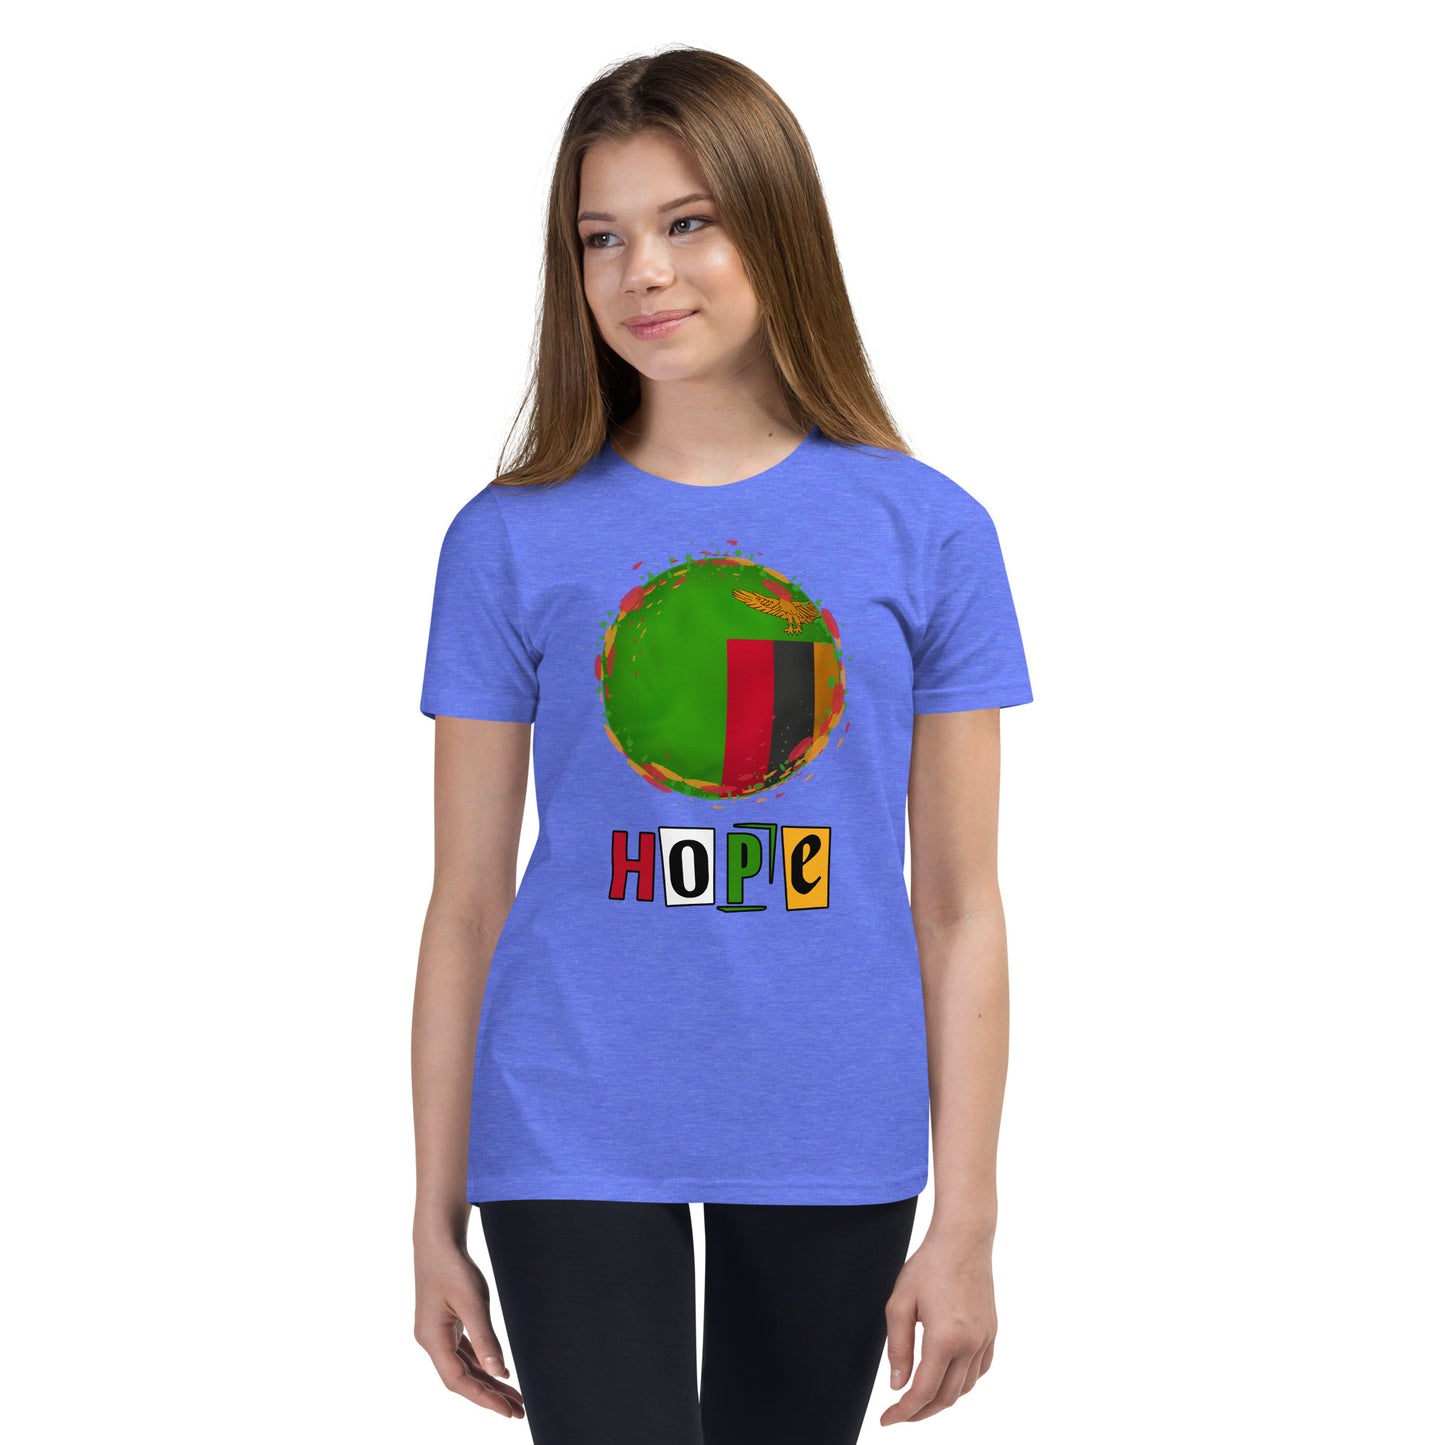 Youth Short Sleeve Zambia Hope T-Shirt